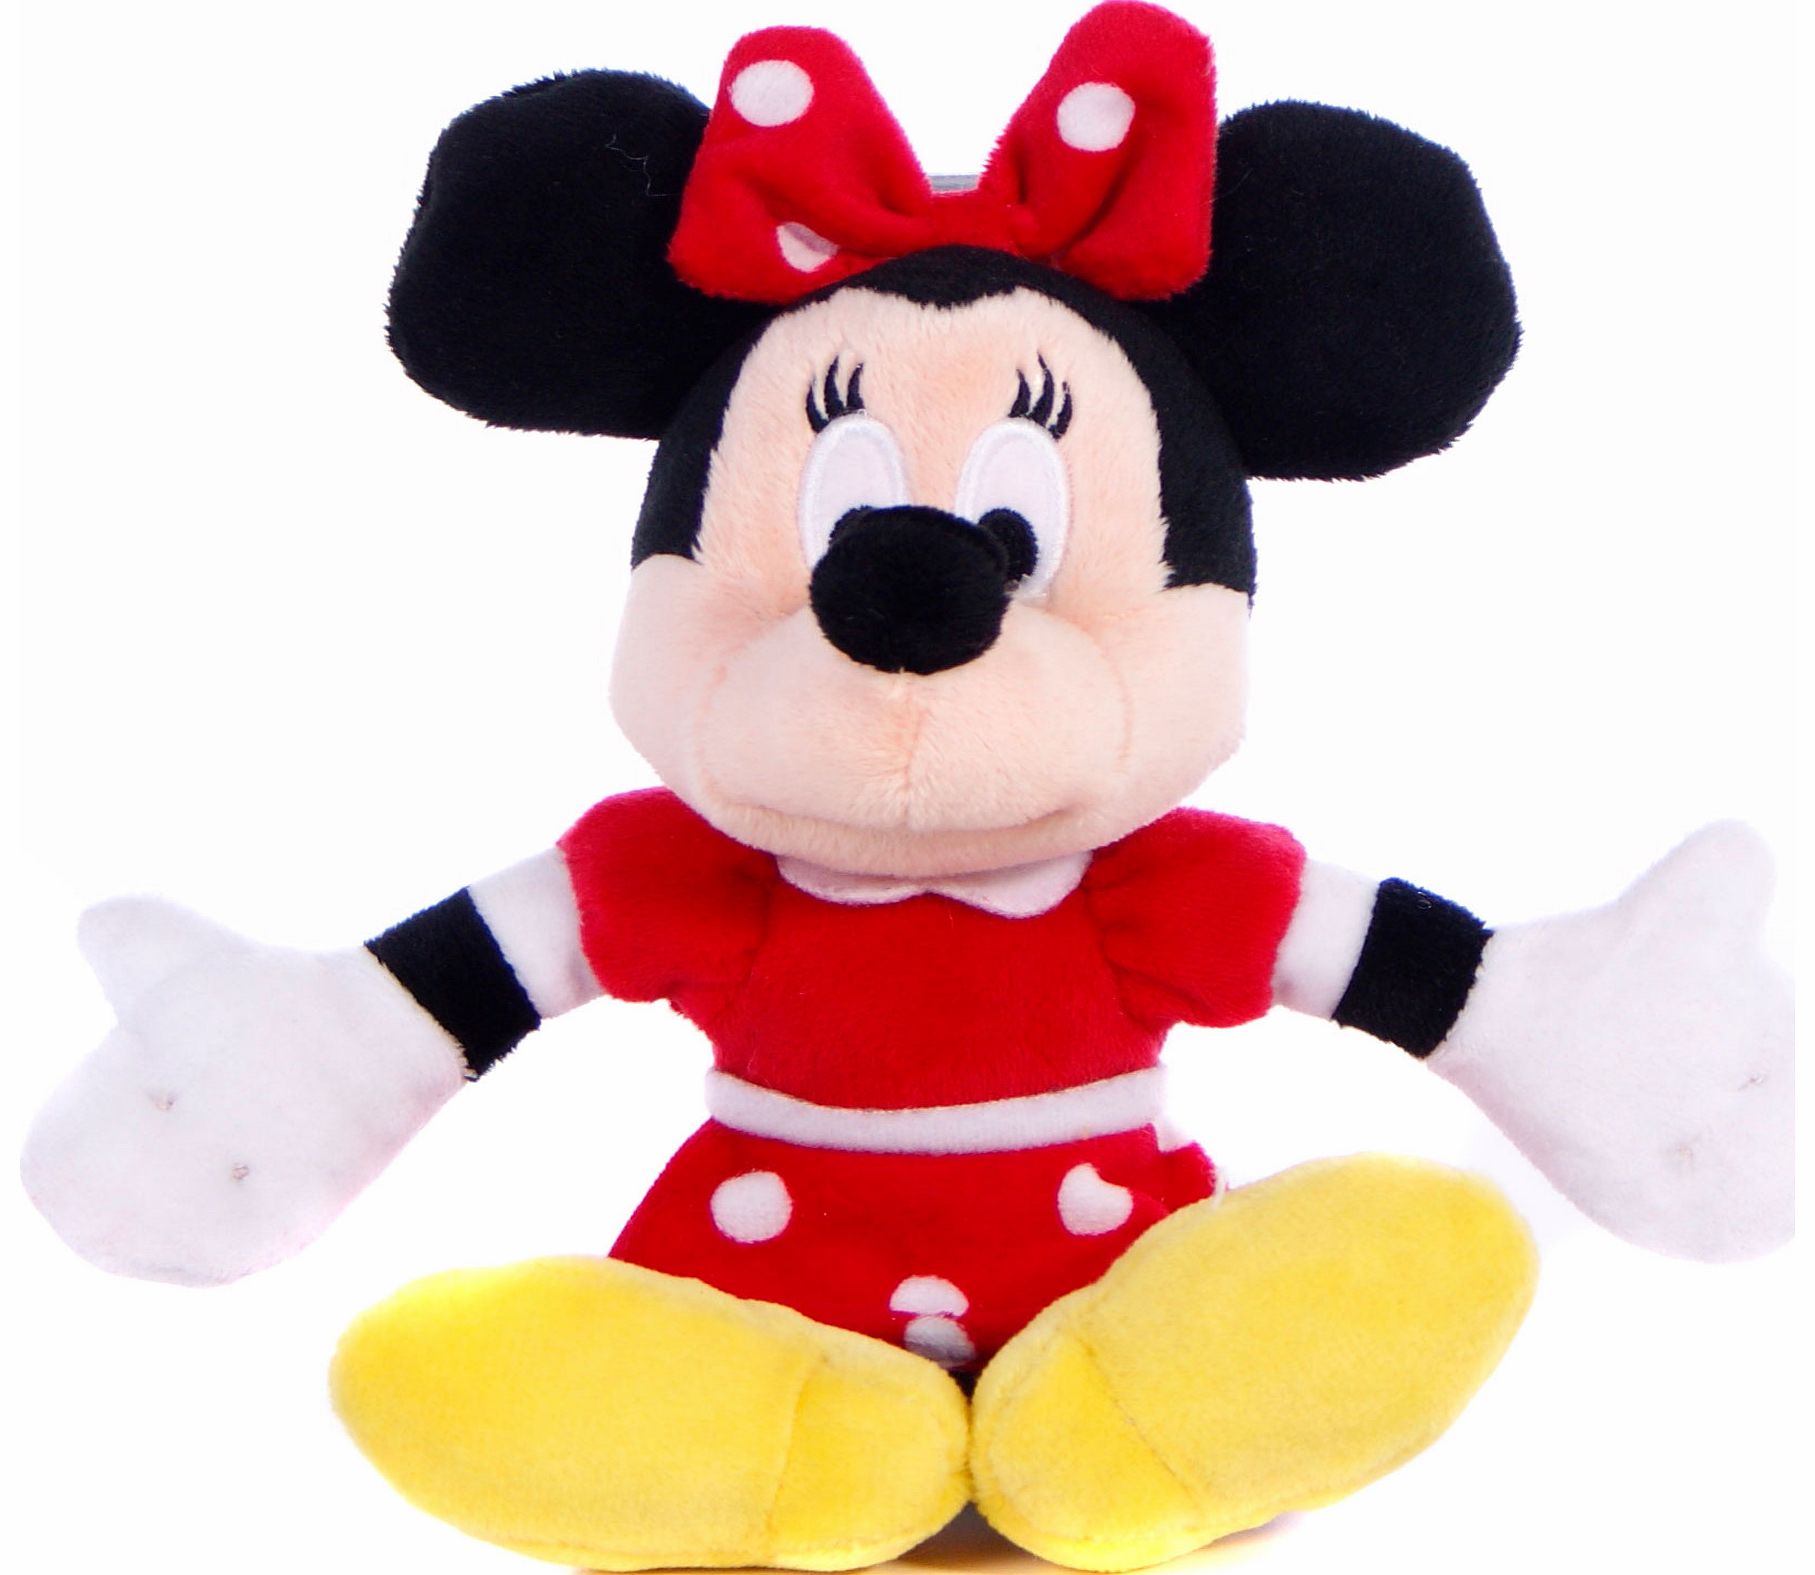 Disney Red Dress Disney Minnie Mouse 8 Soft Toy